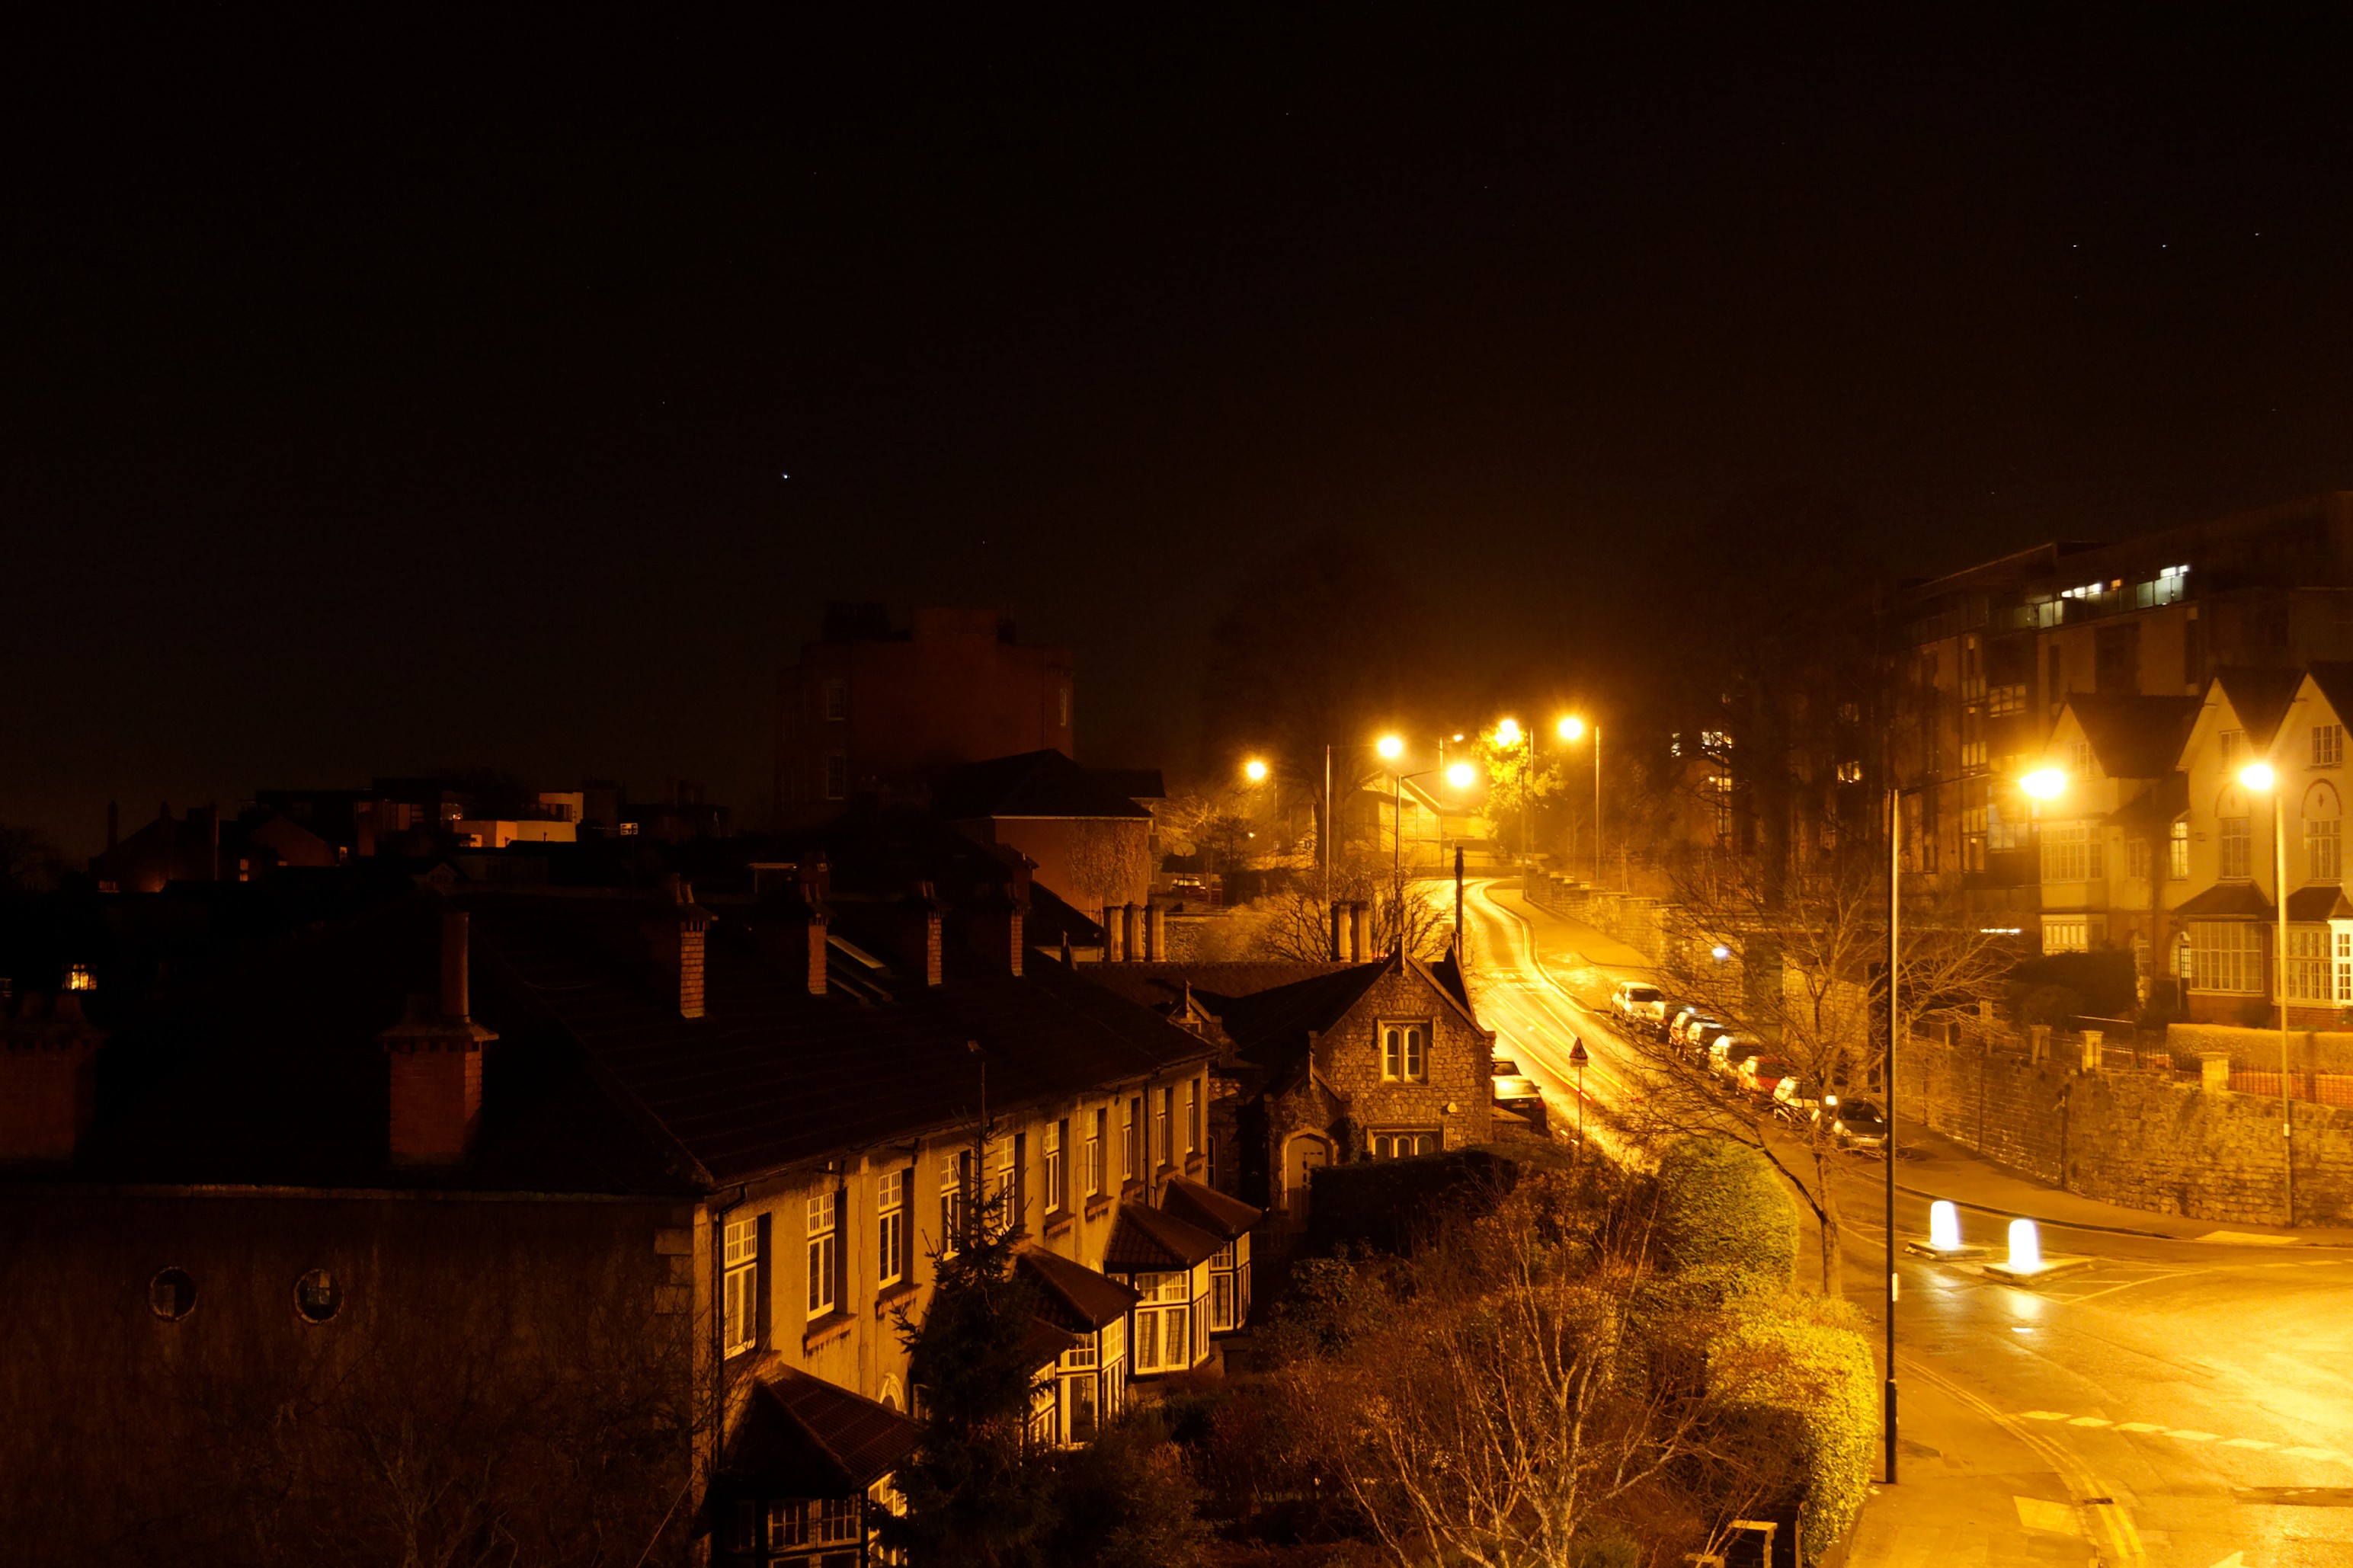 Overlooking Bristol at night